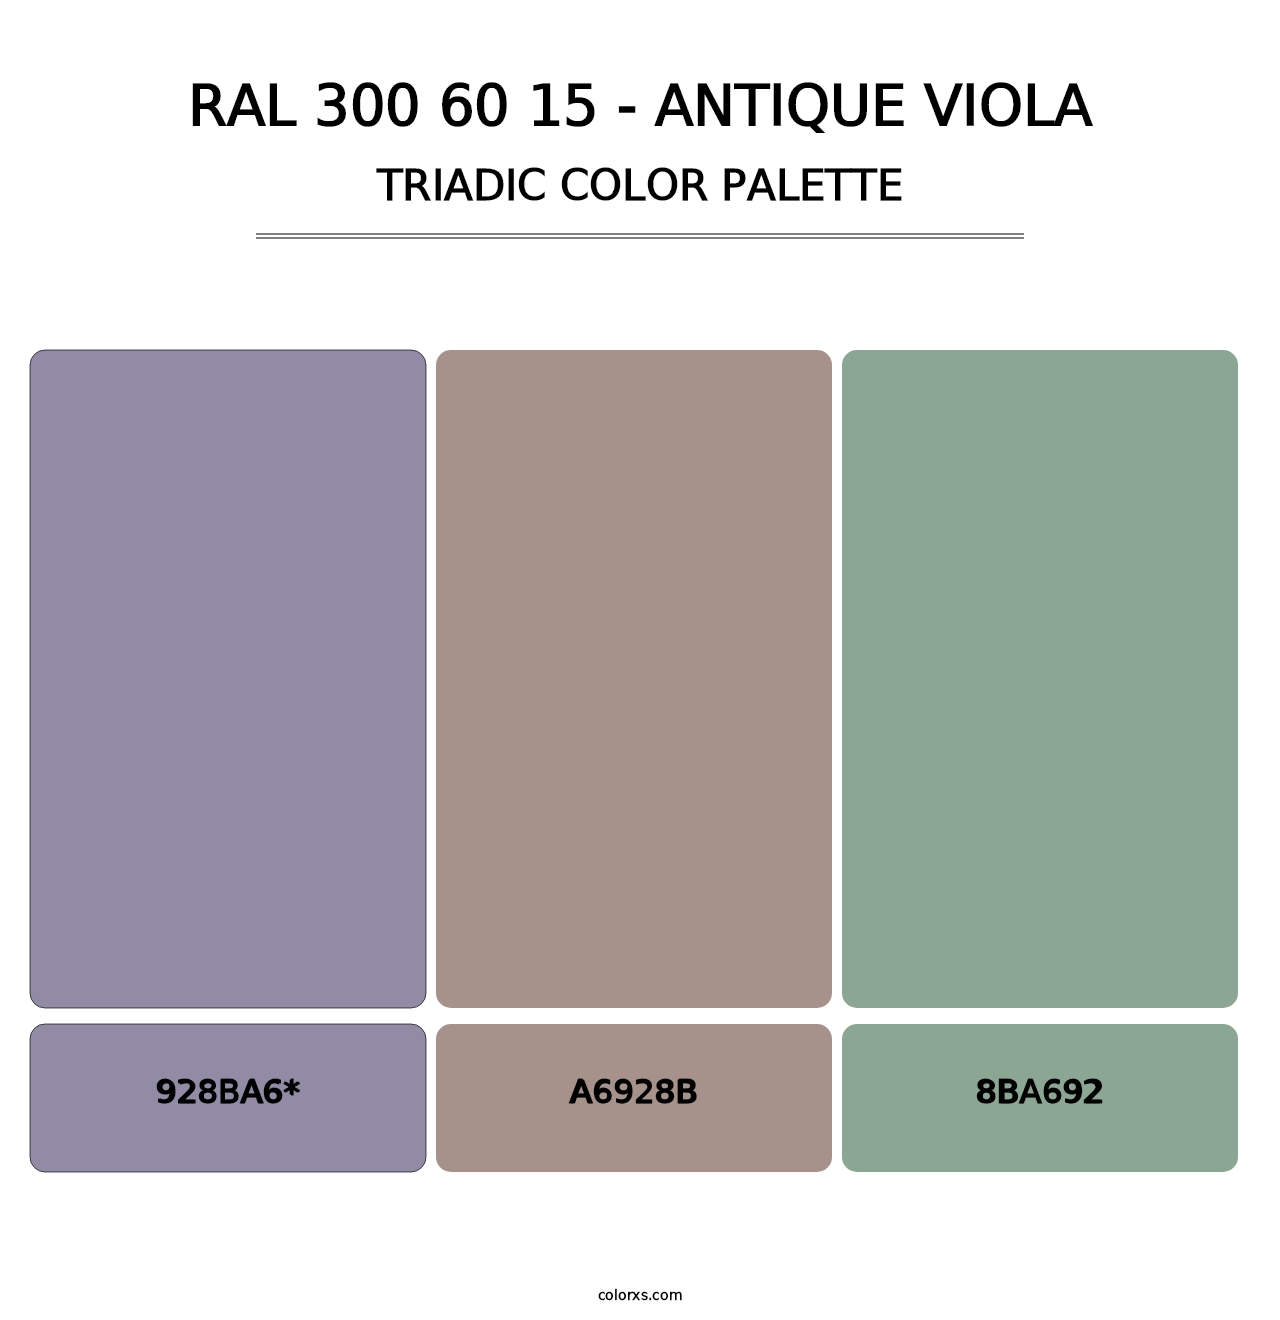 RAL 300 60 15 - Antique Viola - Triadic Color Palette